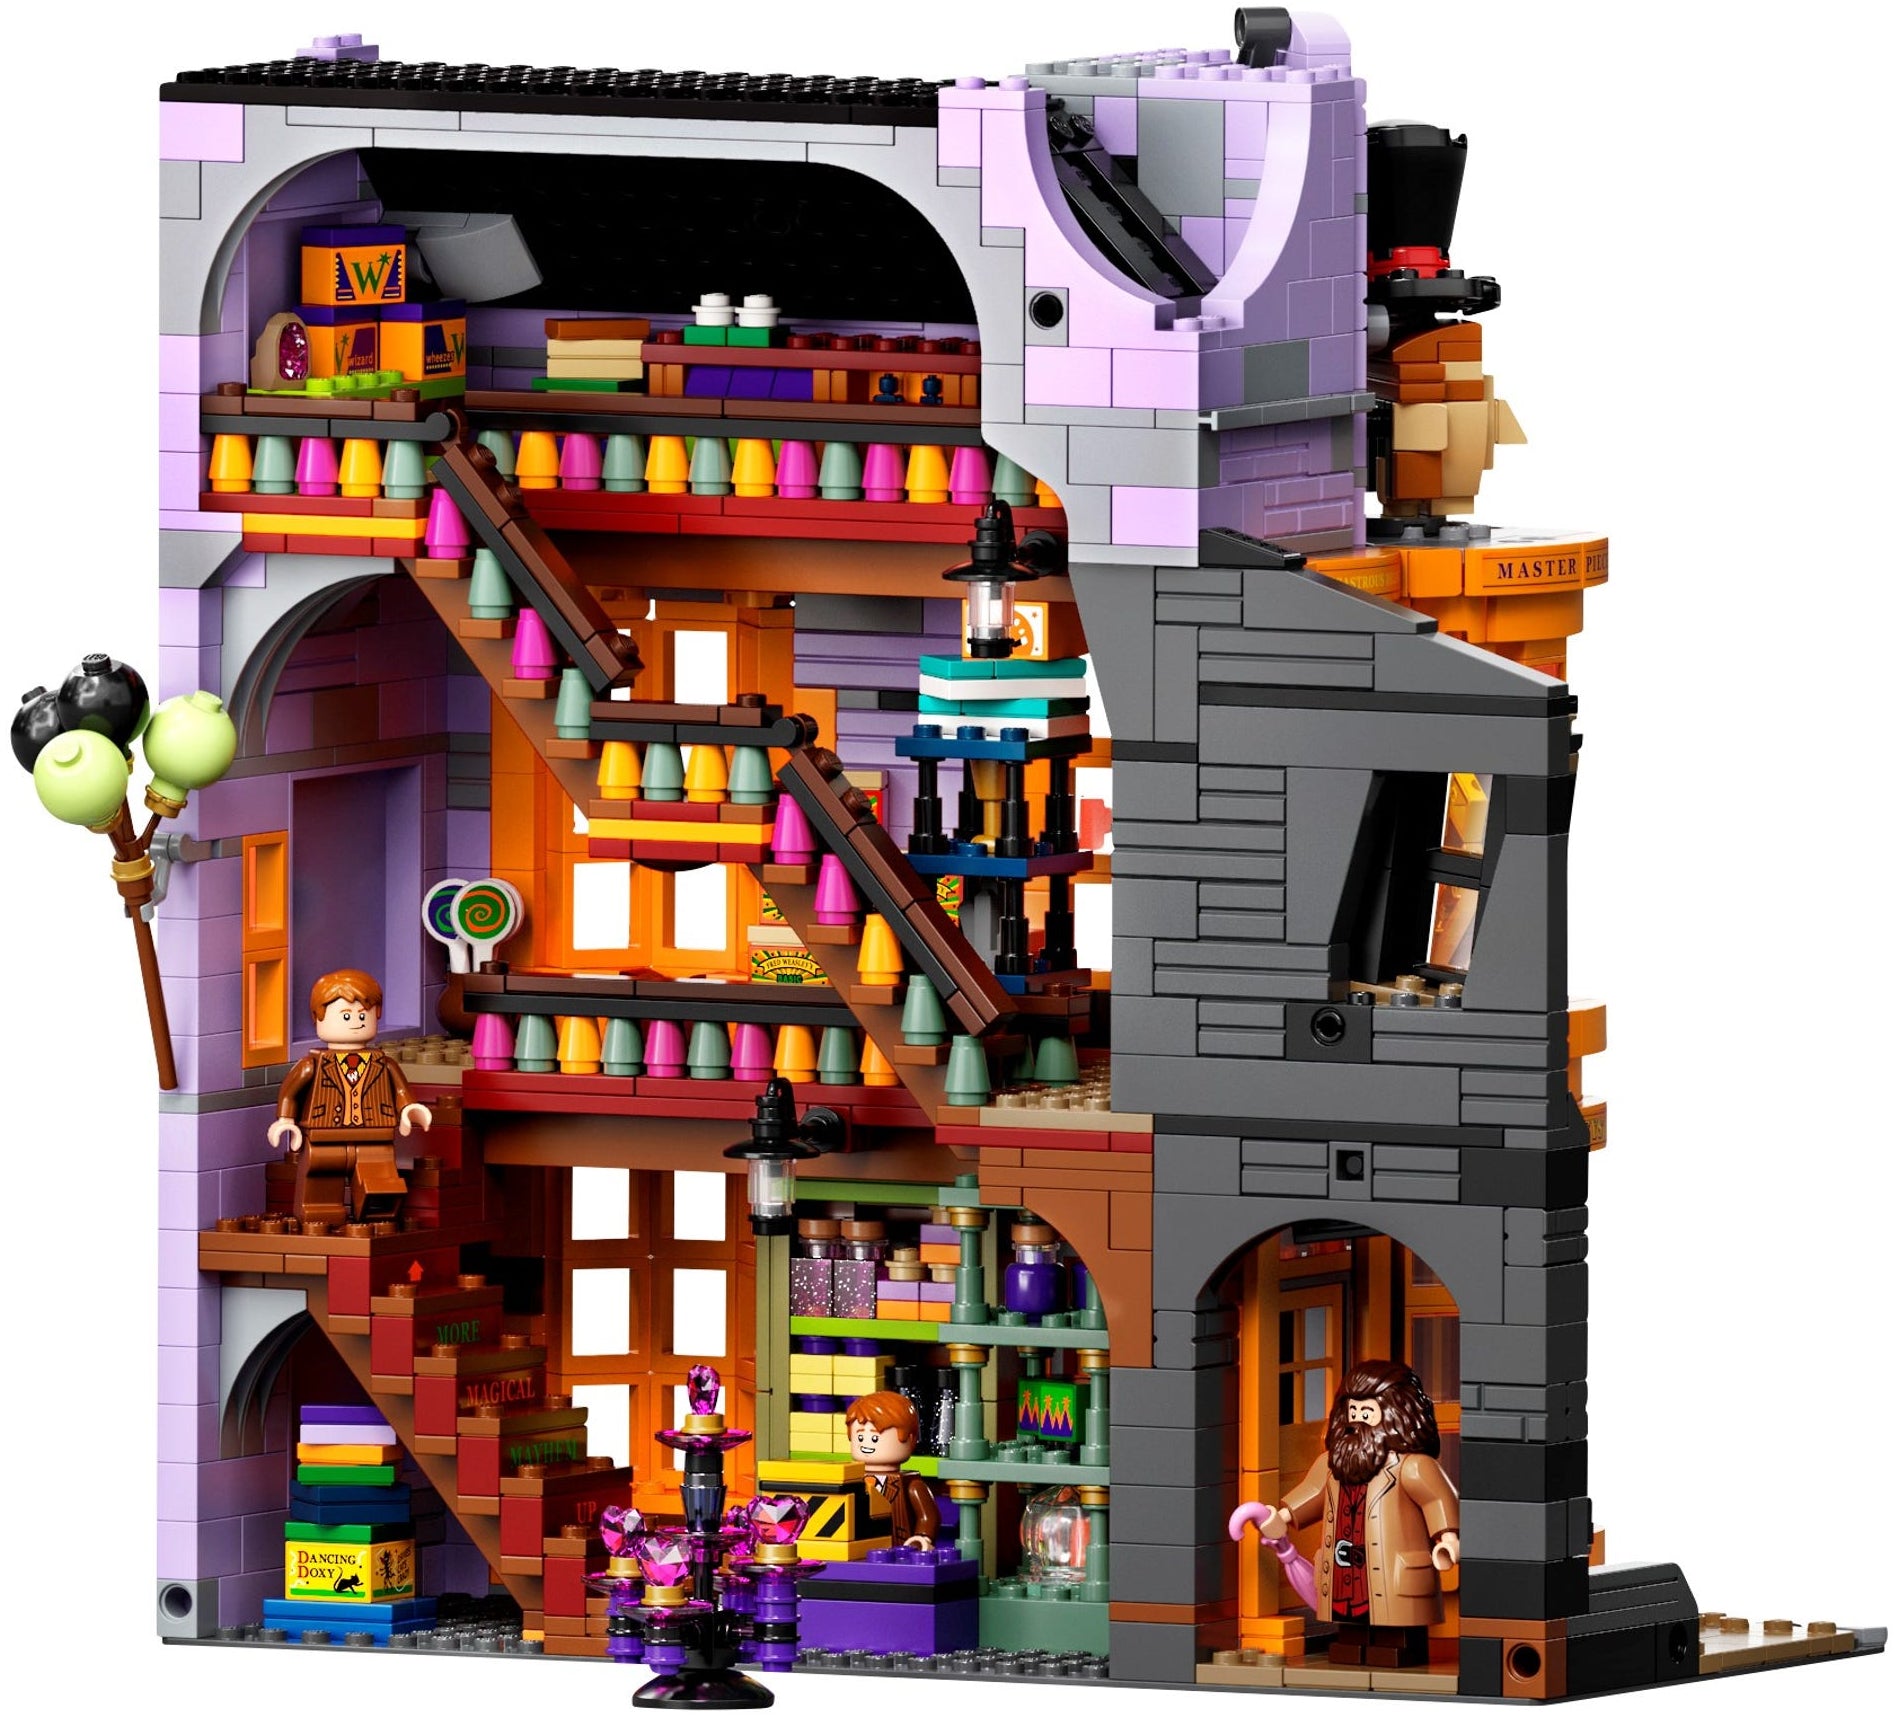 LEGO Harry Potter: Diagon Alley Building Set - 75978